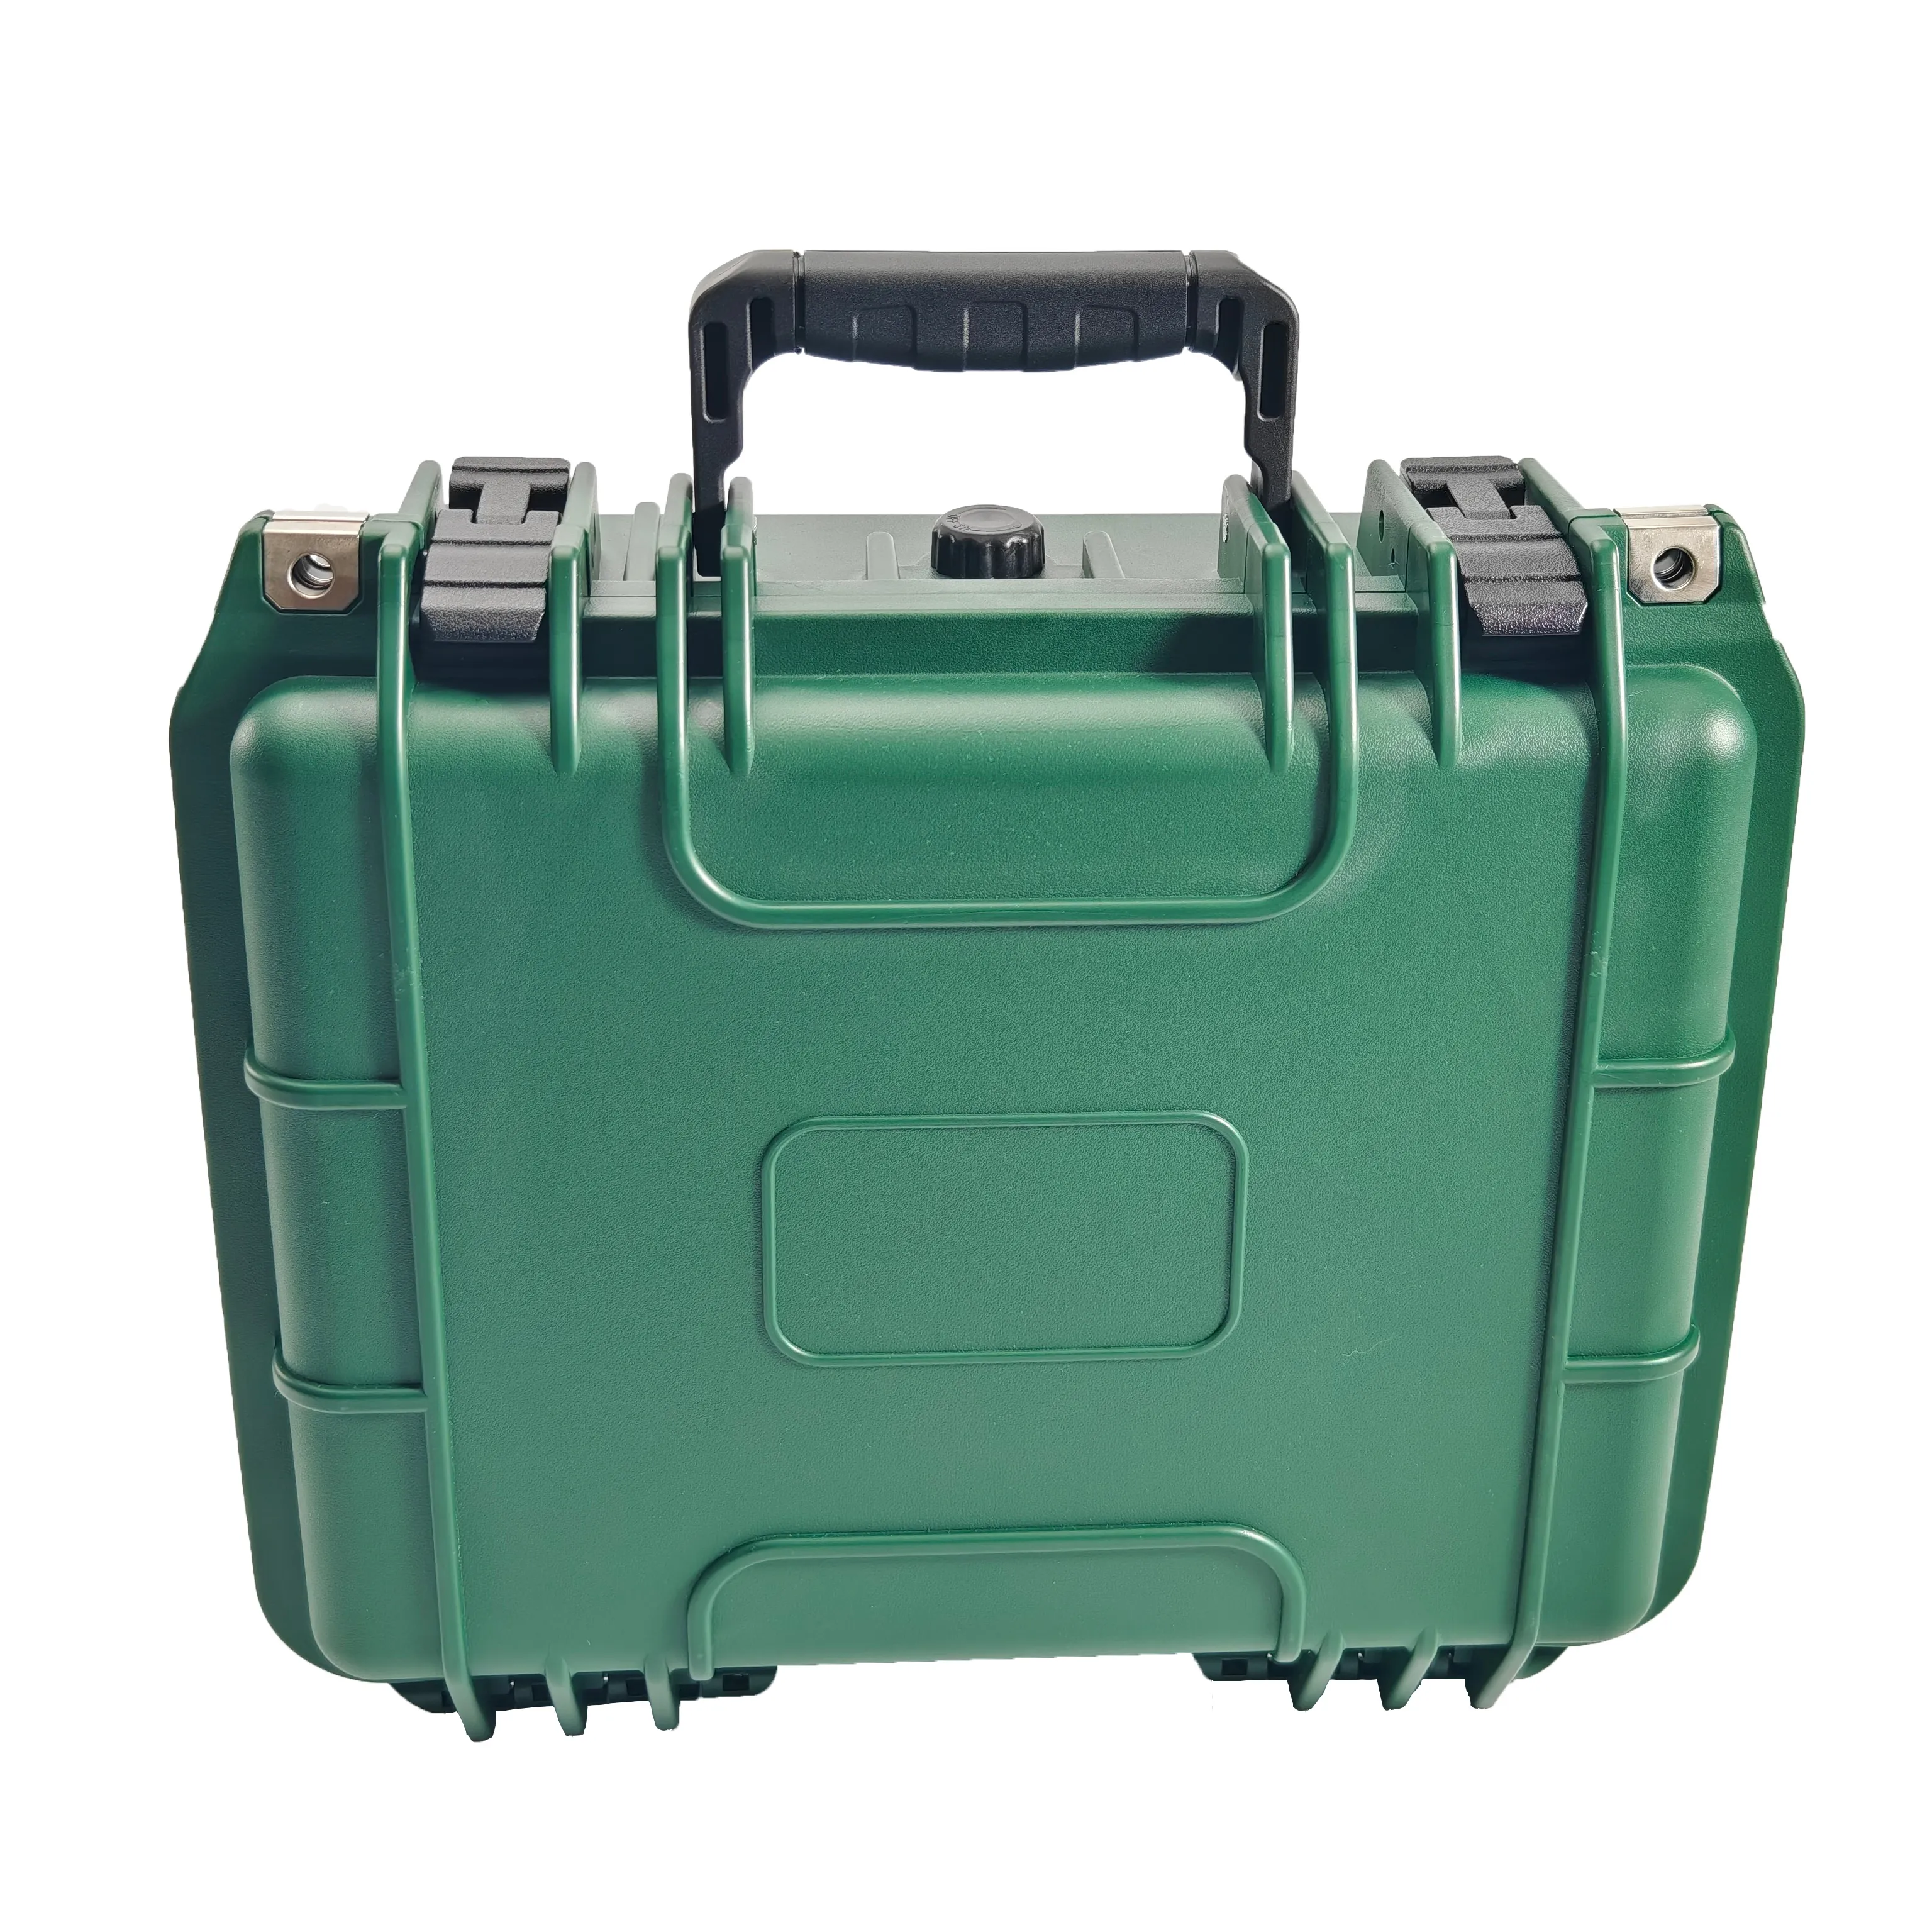 OEM black plastic tool box waterproof case with handle plastic storage case for electronics equipment